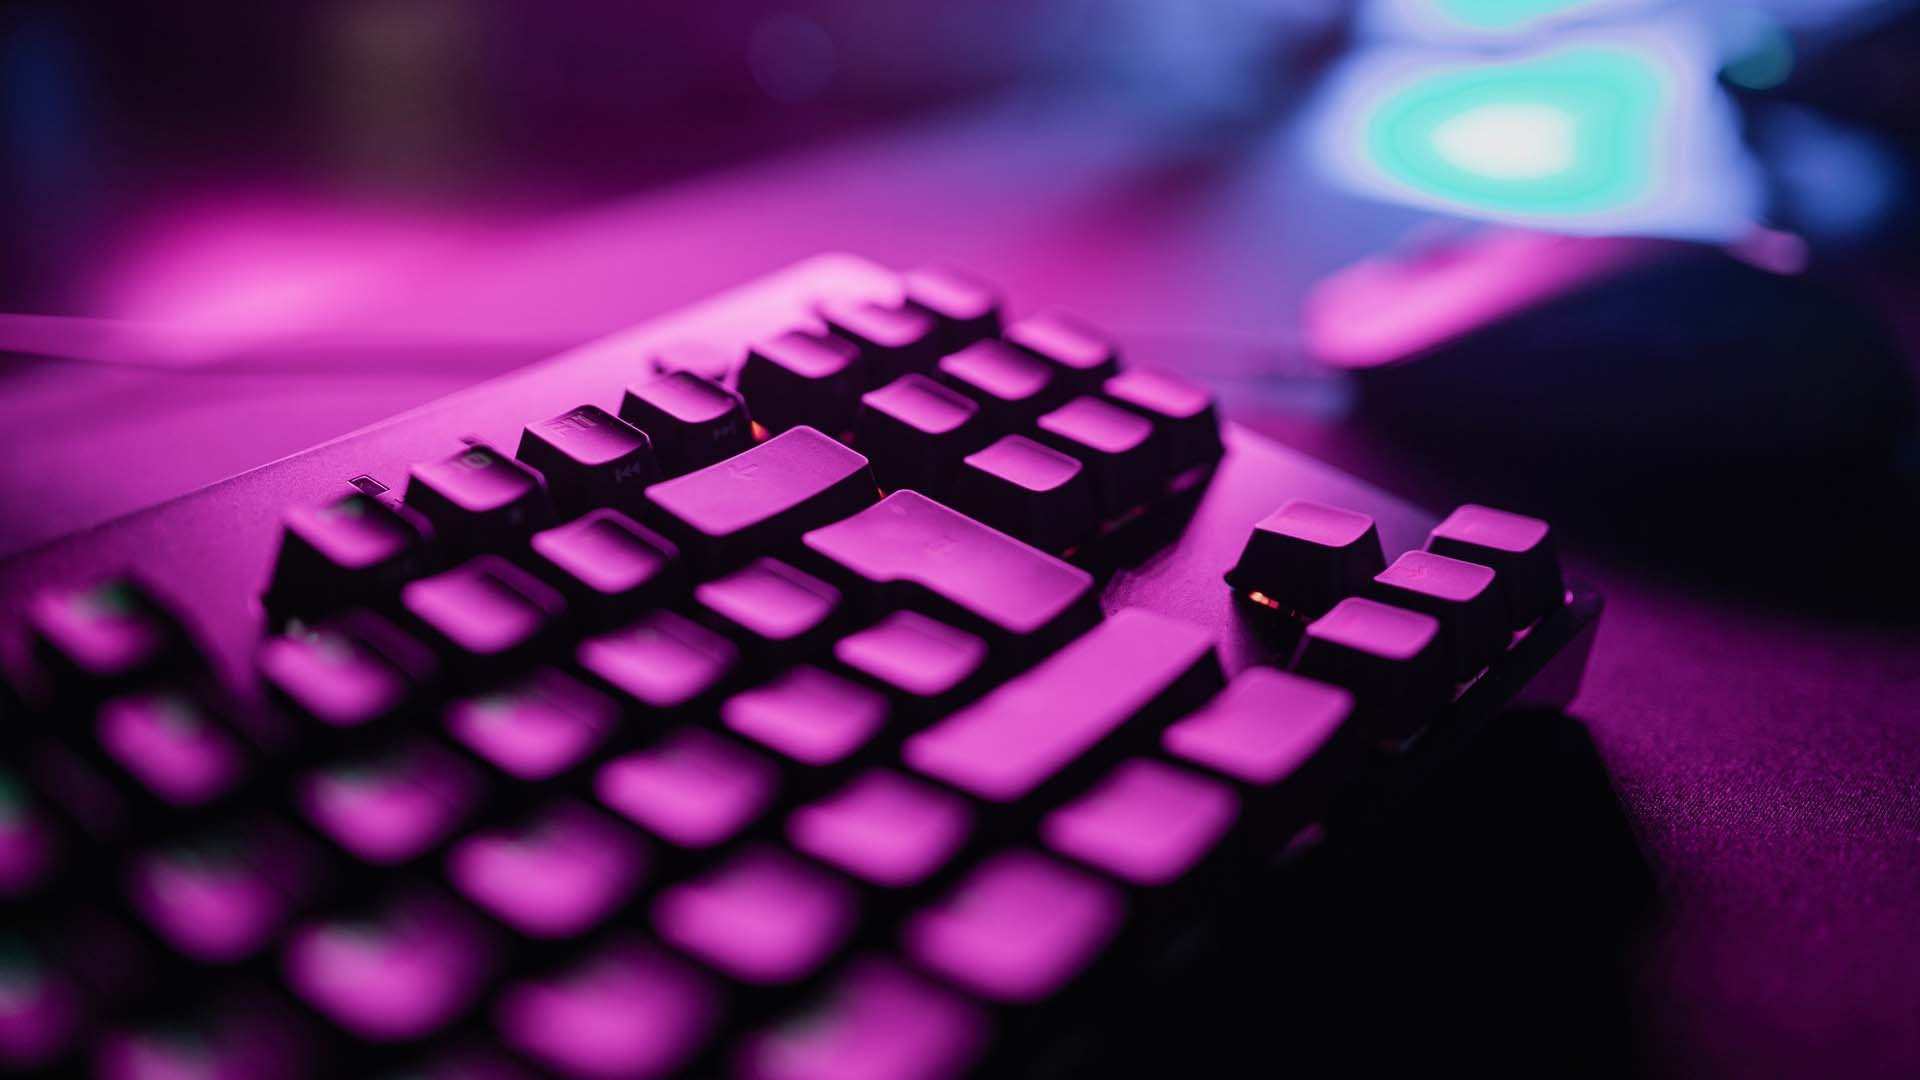 Computer keyboard under purple light